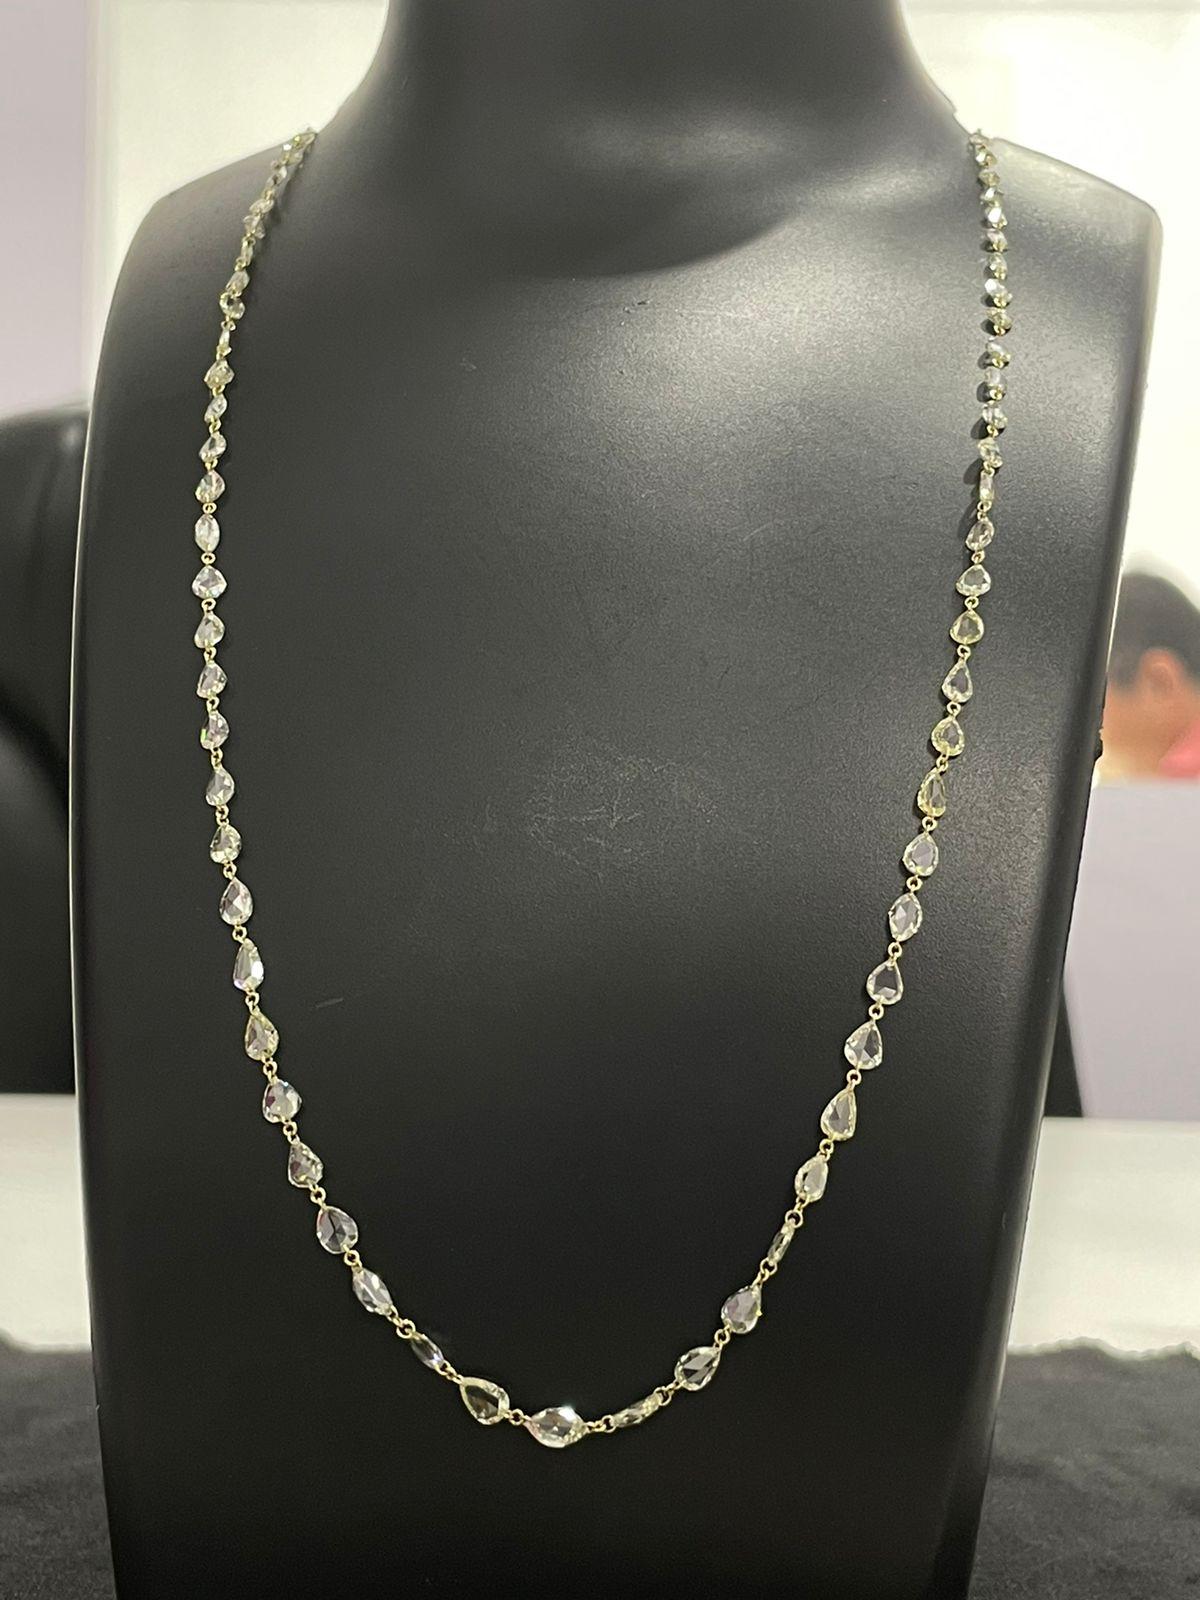 PANIM 11.43 Cts Fancy Rosecut Diamond Necklace in 18 Karat White Gold For Sale 3